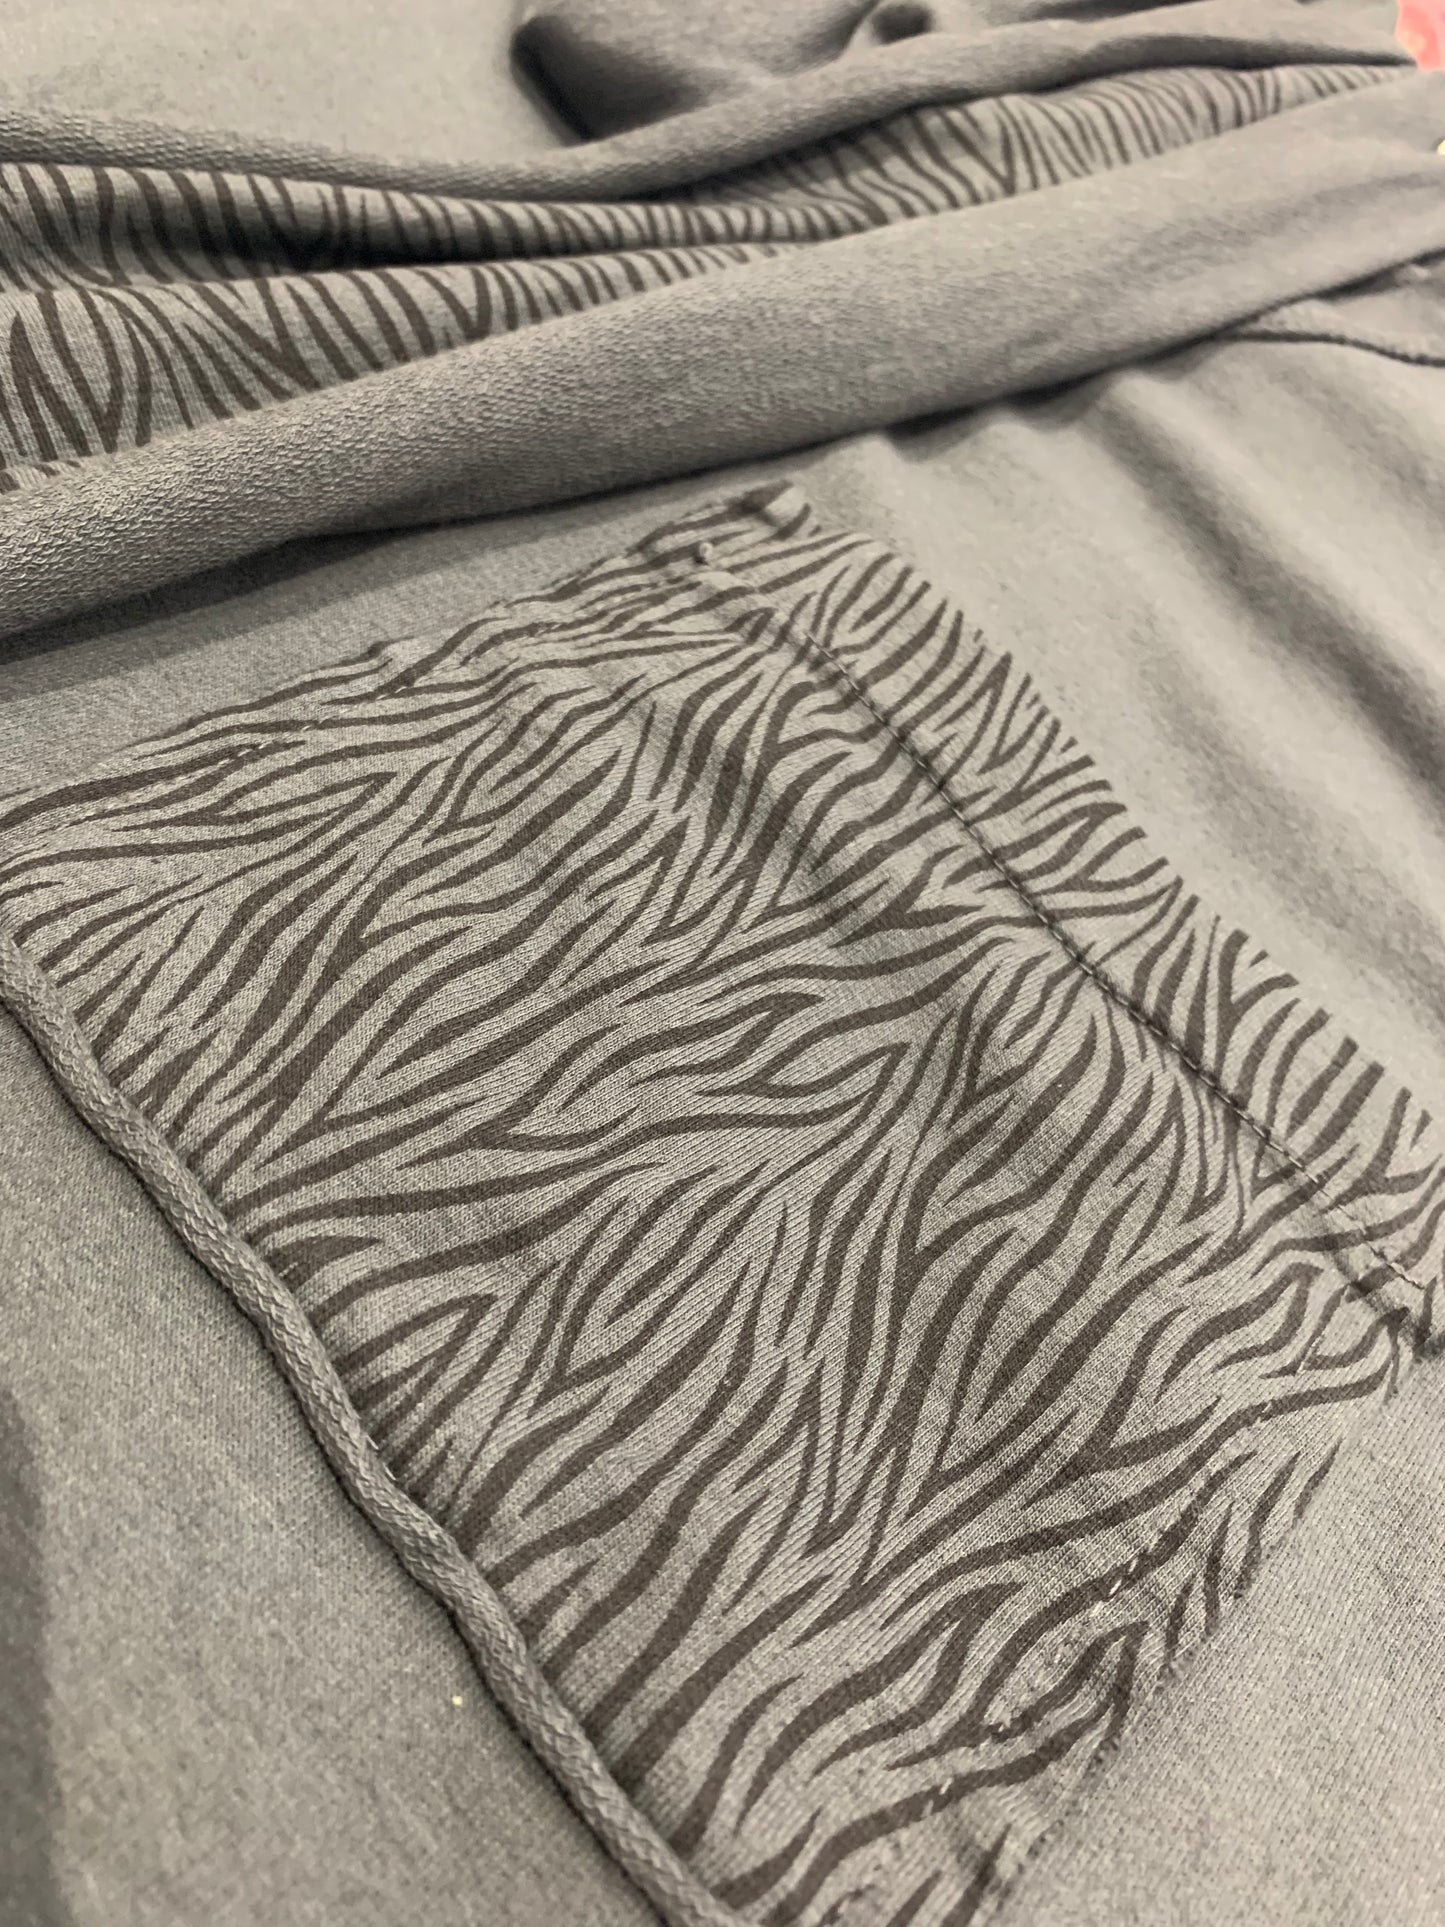 Close up of a dark grey sweatshirt that a pocket with a zebra print trim.